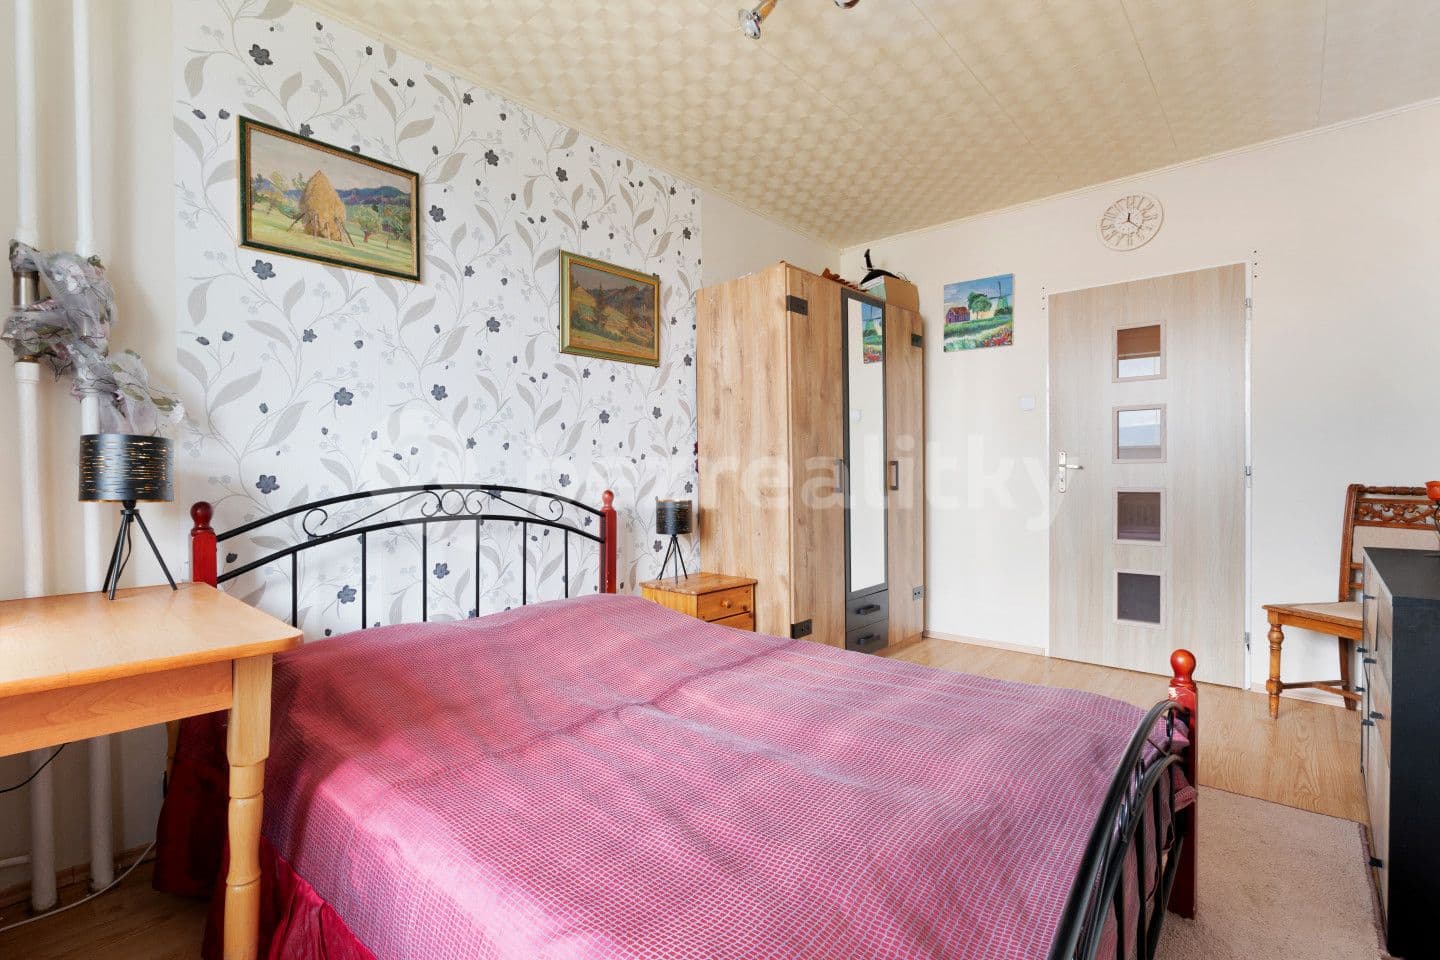 2 bedroom flat for sale, 56 m², Jana Koziny, Teplice, Ústecký Region